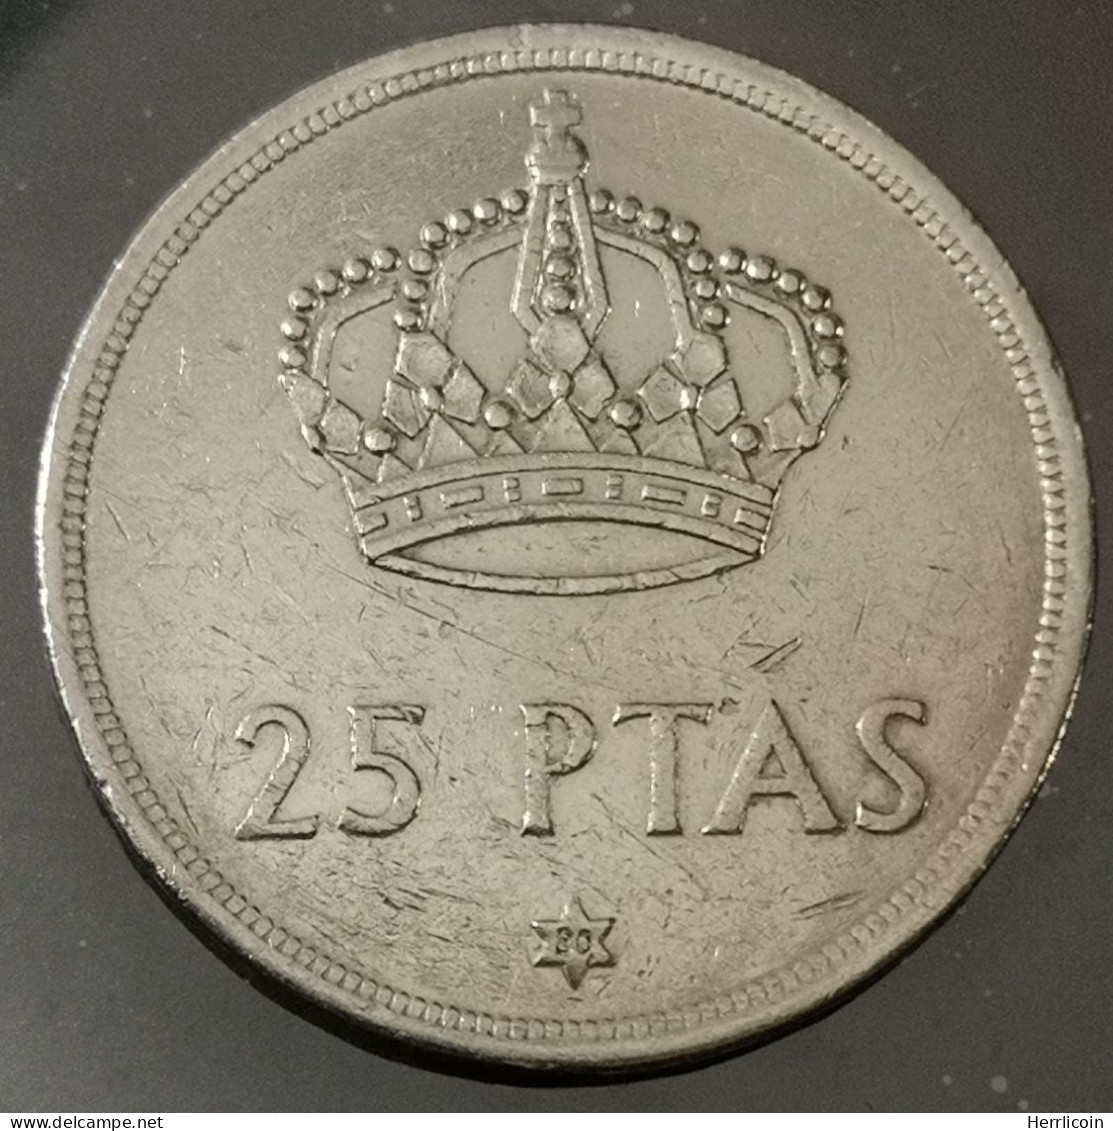 Monnaie Espagne - 1980 - 25 Pesetas Juan Carlos I étoile - 25 Peseta